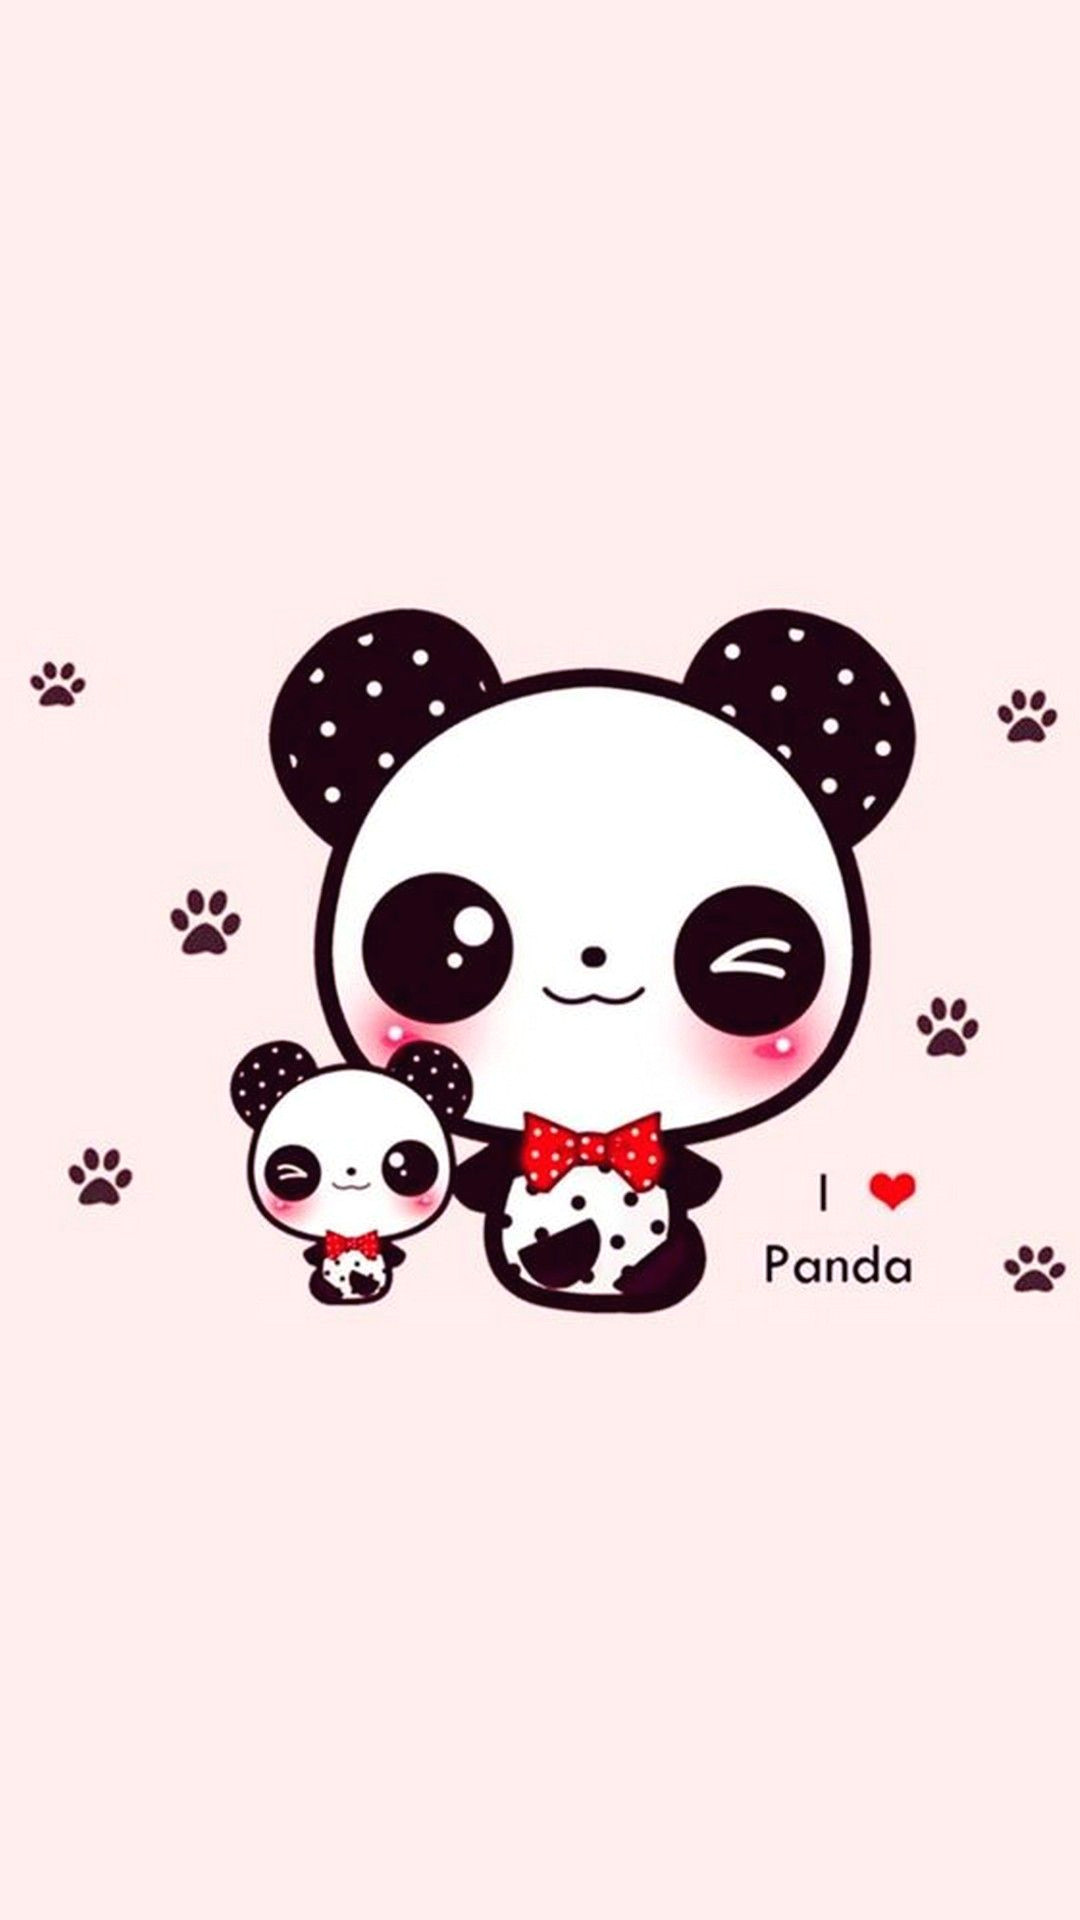 Cartoon Drawing 3d Wallpaper Cute Panda Wallpaper for iPhone iPhonewallpapers Pinterest